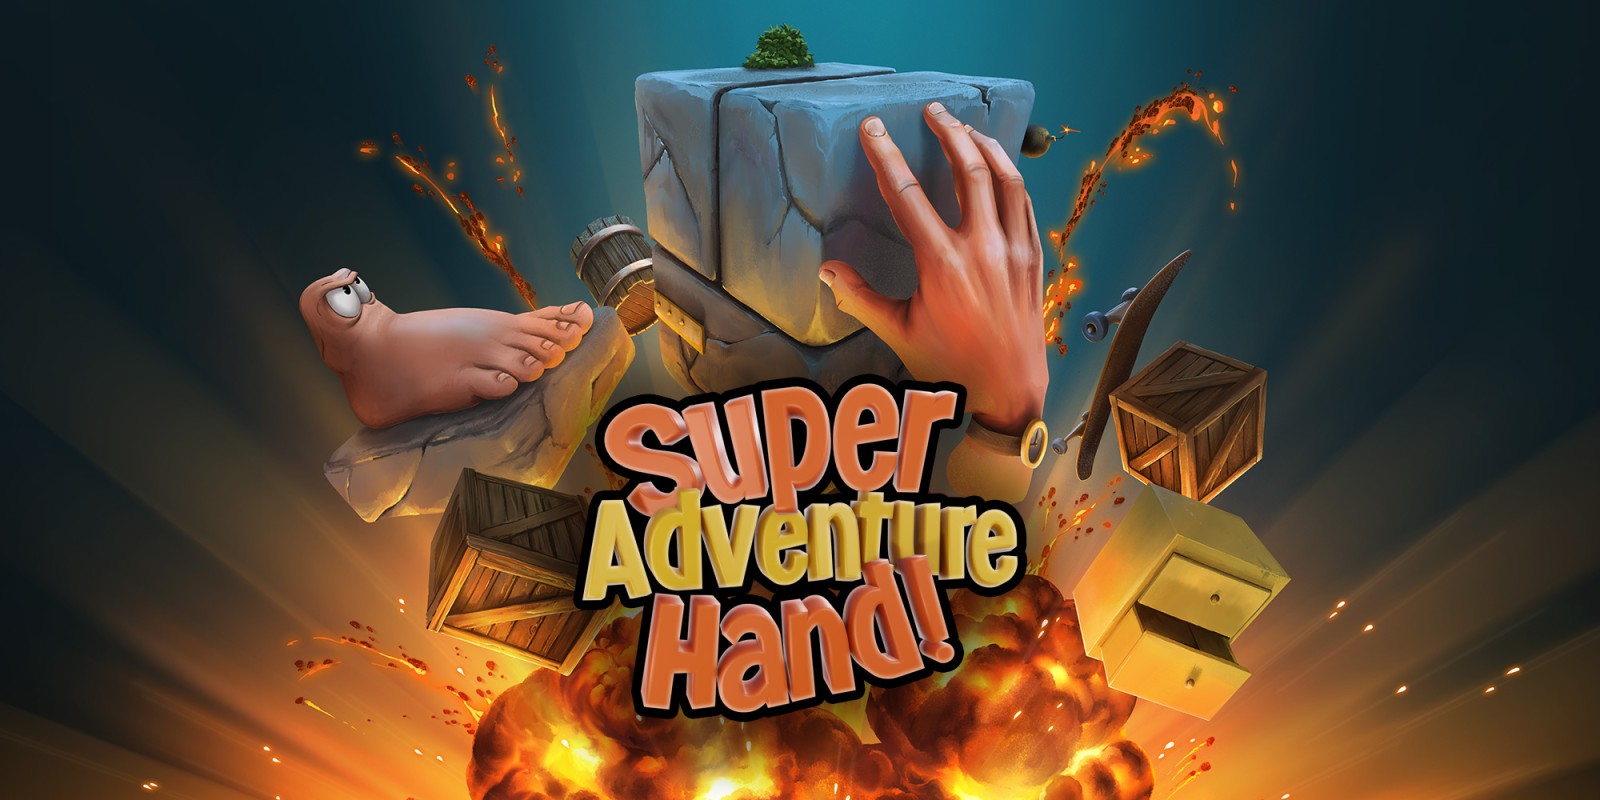 Super Adventure Hand